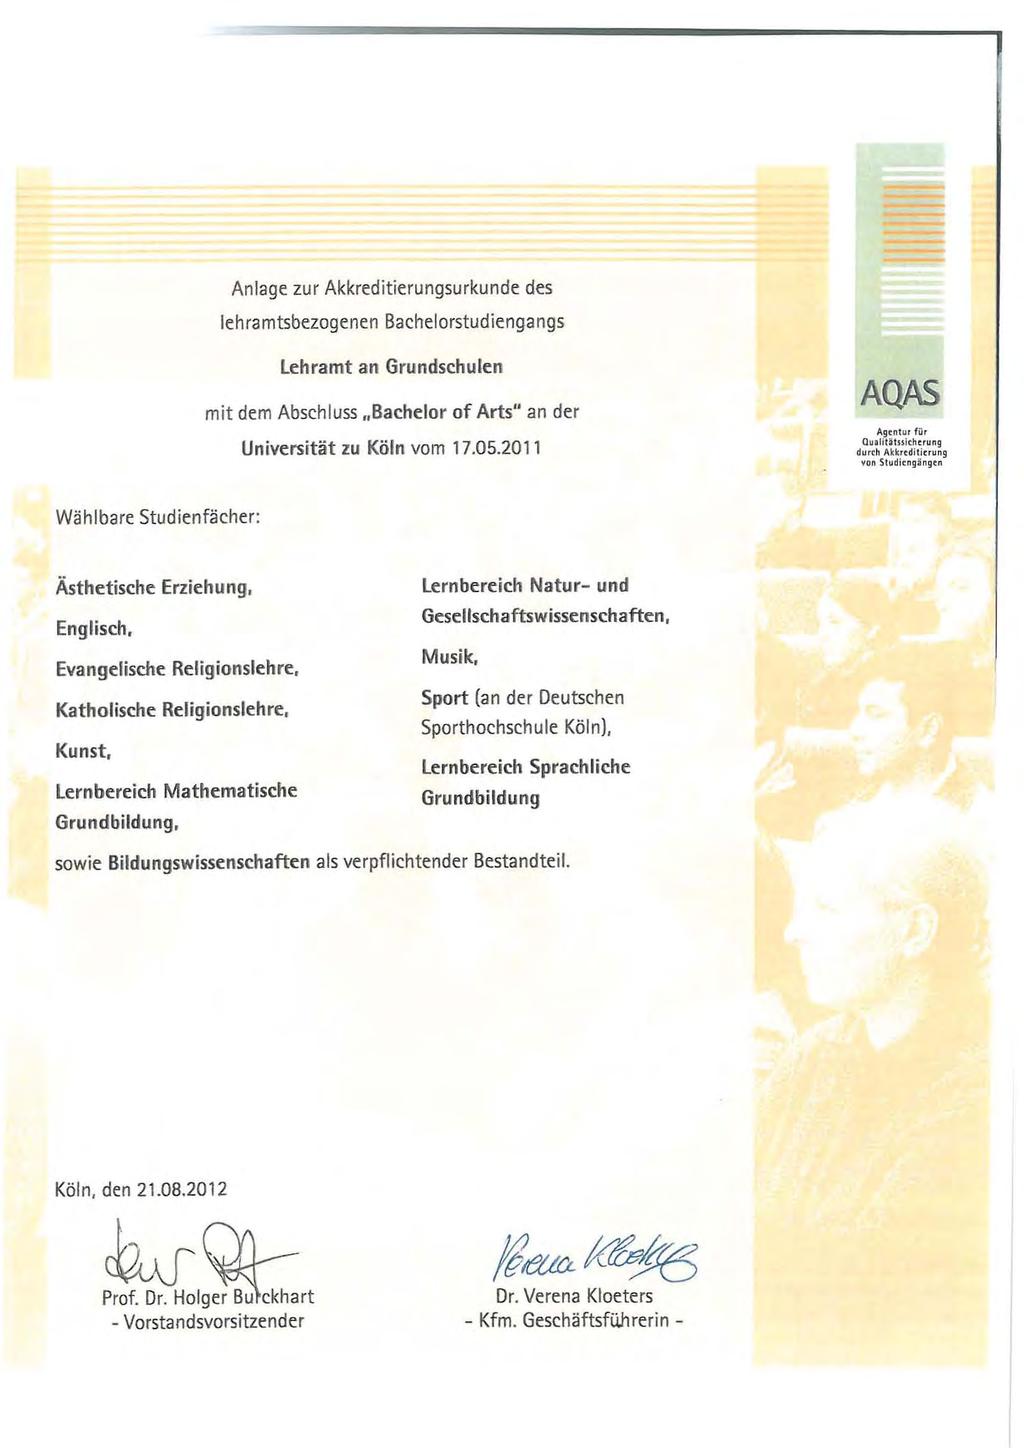 Anlage zur Akkreditierungsurkunde des lehramtsbezogenen Bachelorstudiengangs Lehramt an Grundschulen mit dem Abschluss "Bachelor of Arts" an der Universität zu Köln vom 17.05.